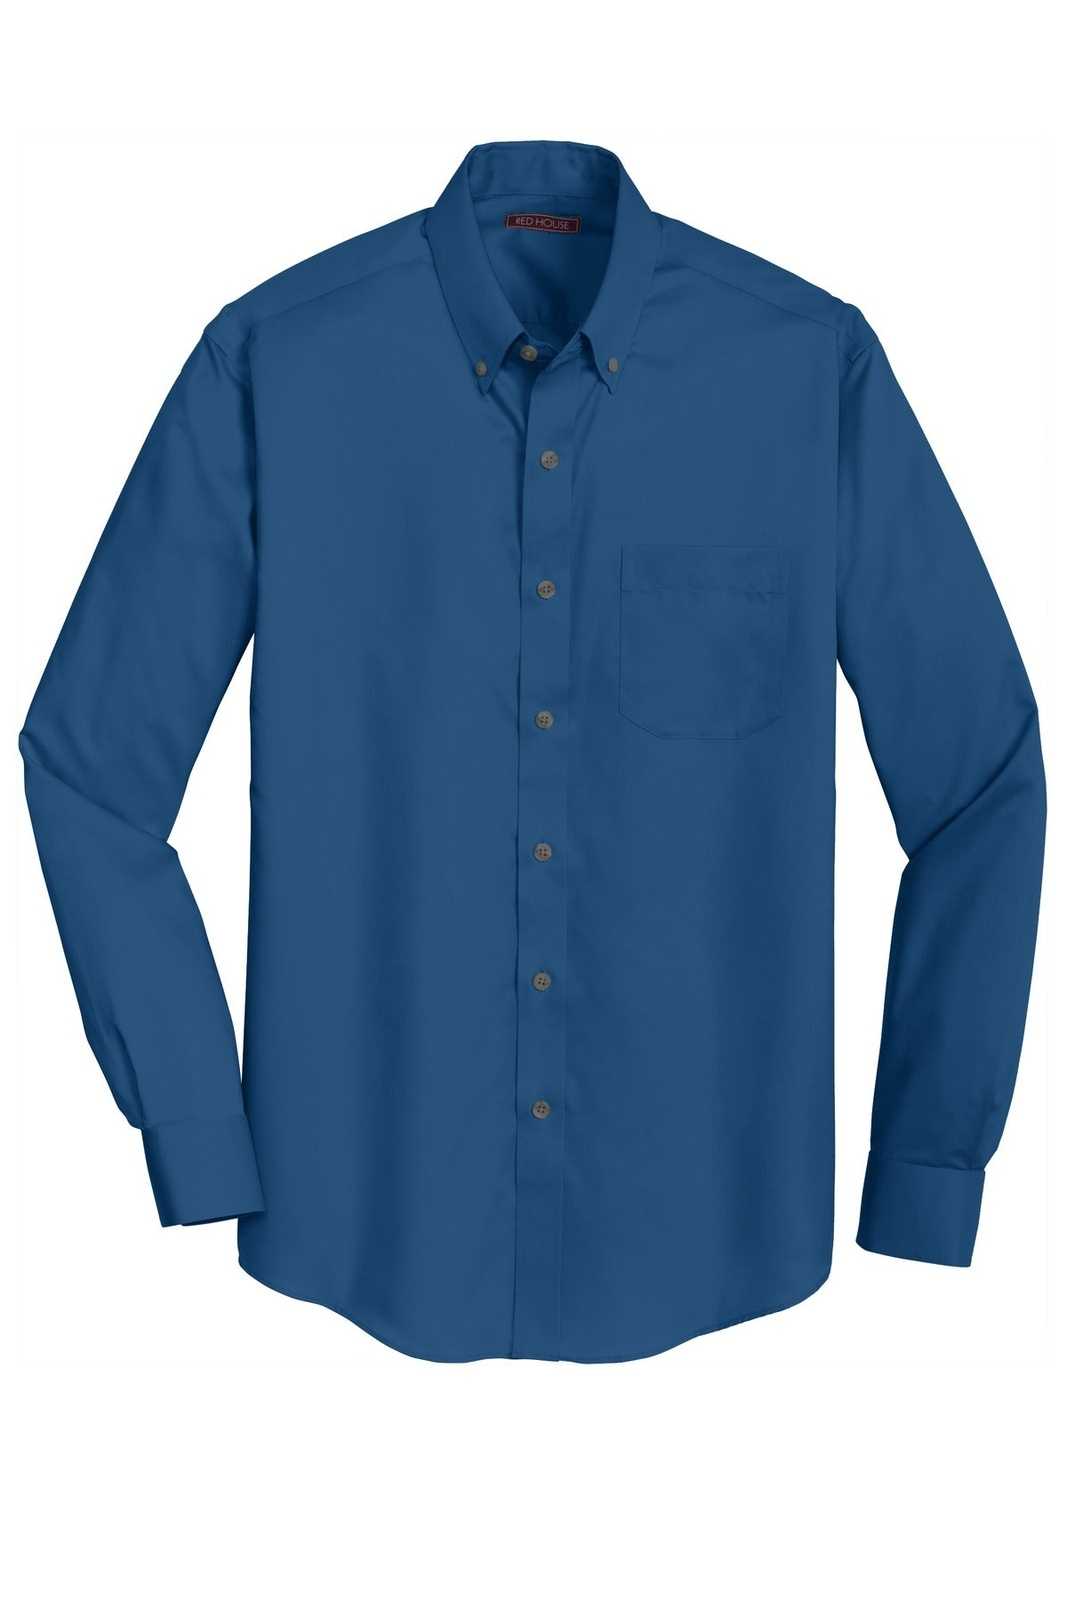 Red House RH78 Non-Iron Twill Shirt - Blue Horizon - HIT a Double - 5